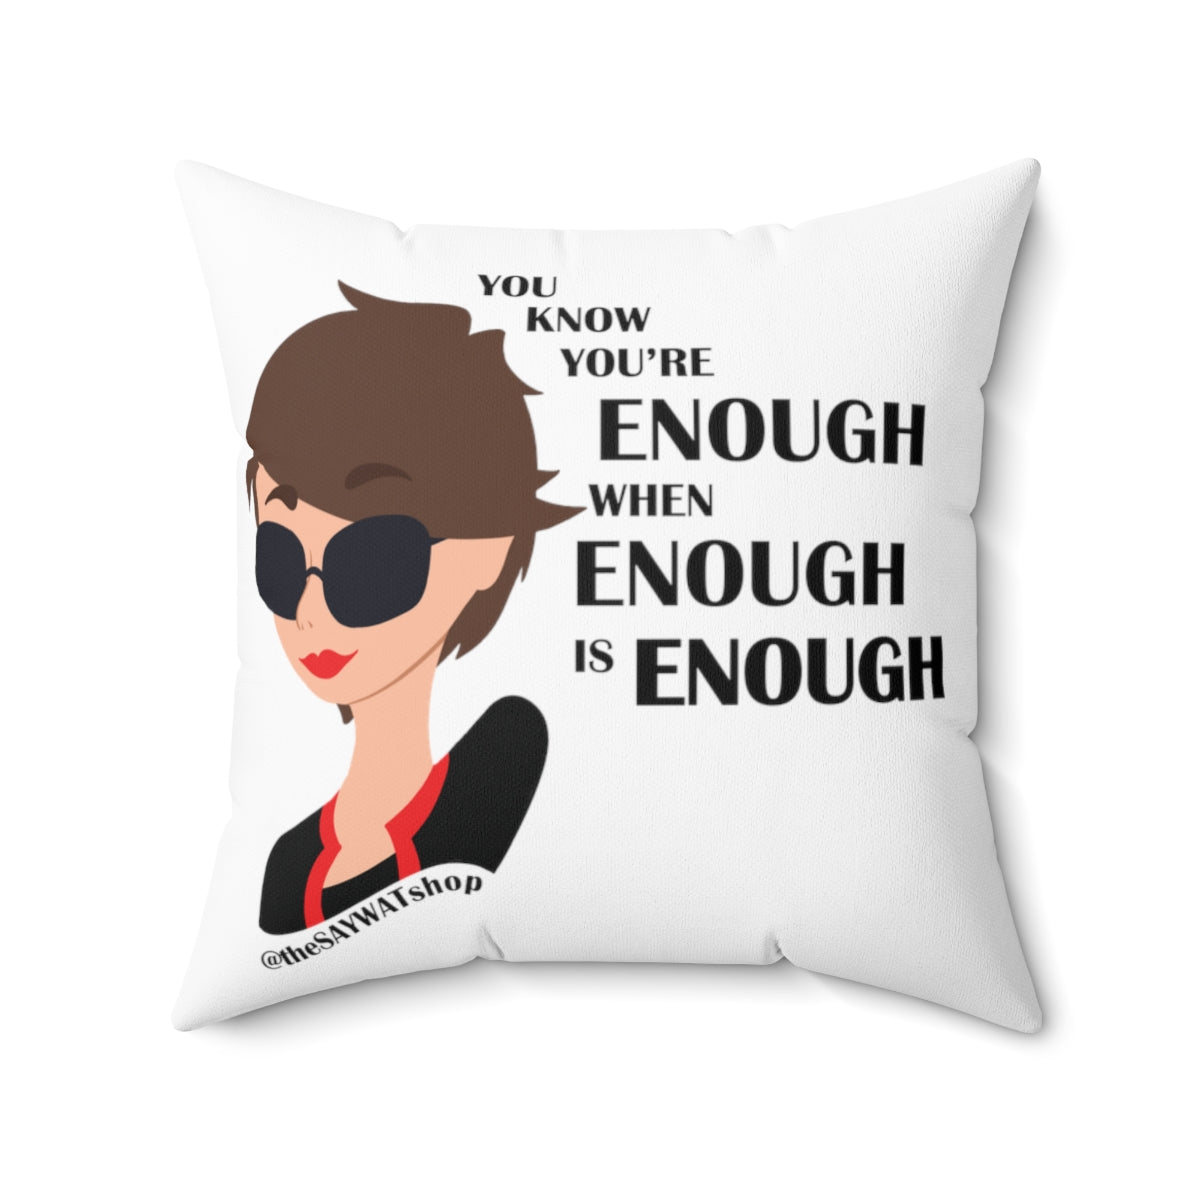 Enough is Enough - BR - Square Pillow